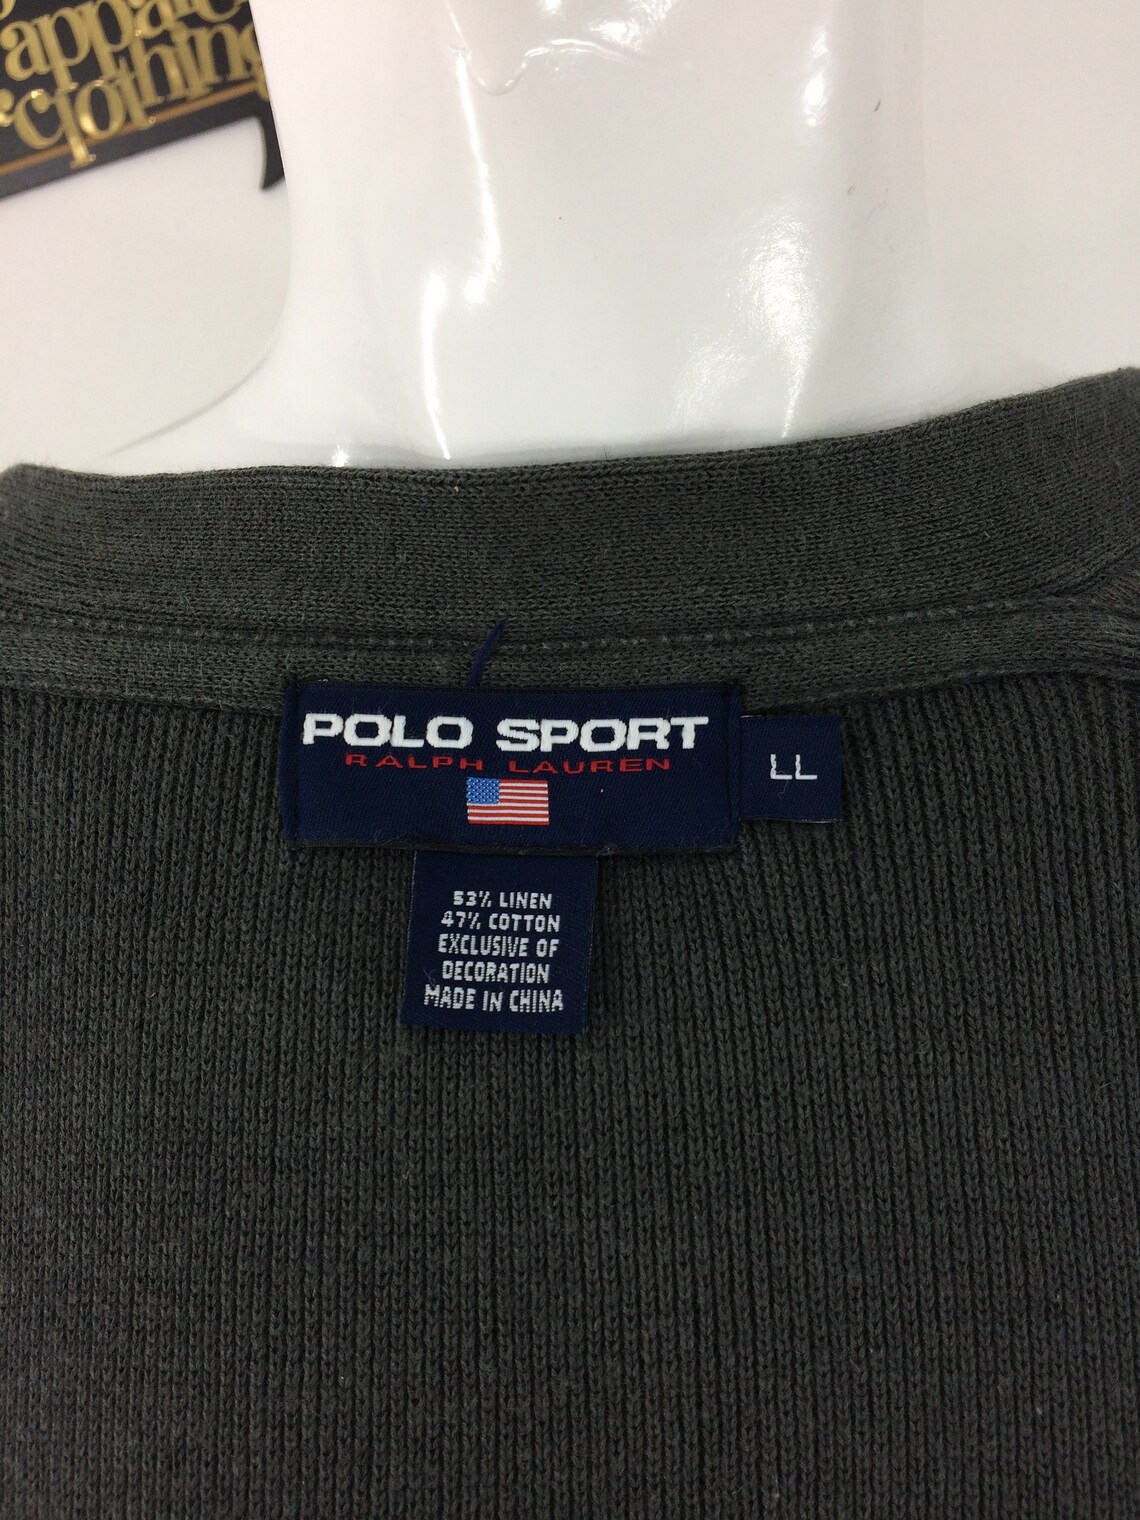 Ralph Lauren Polo Sport P Wing Cardigan Jacket Long Sleeve - Etsy